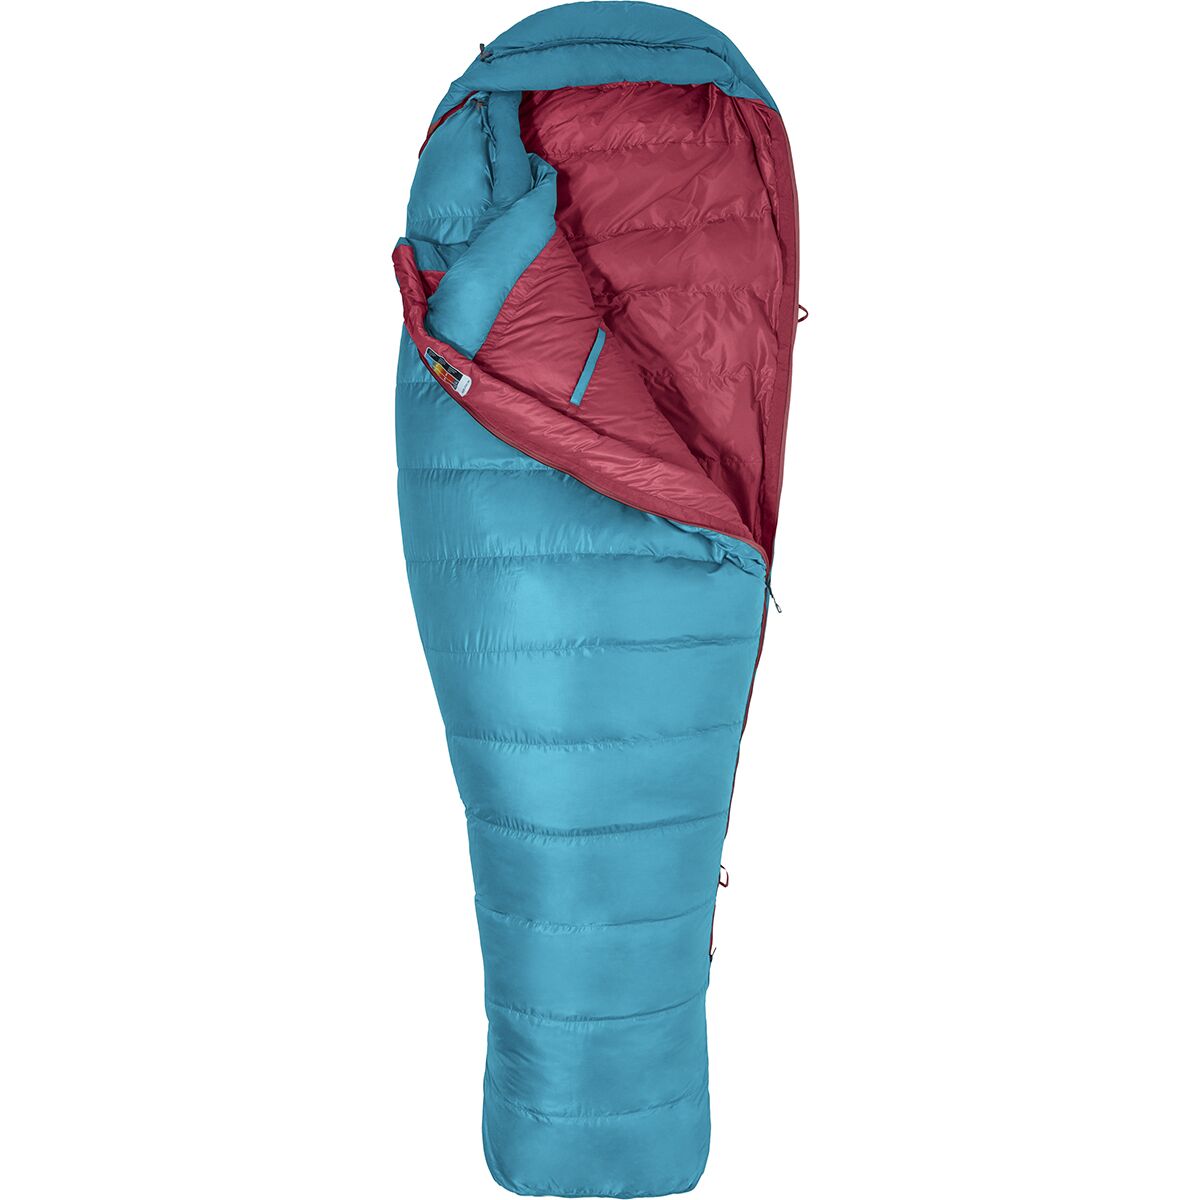 Marmot Teton Sleeping Bag: 15F Down - Women's